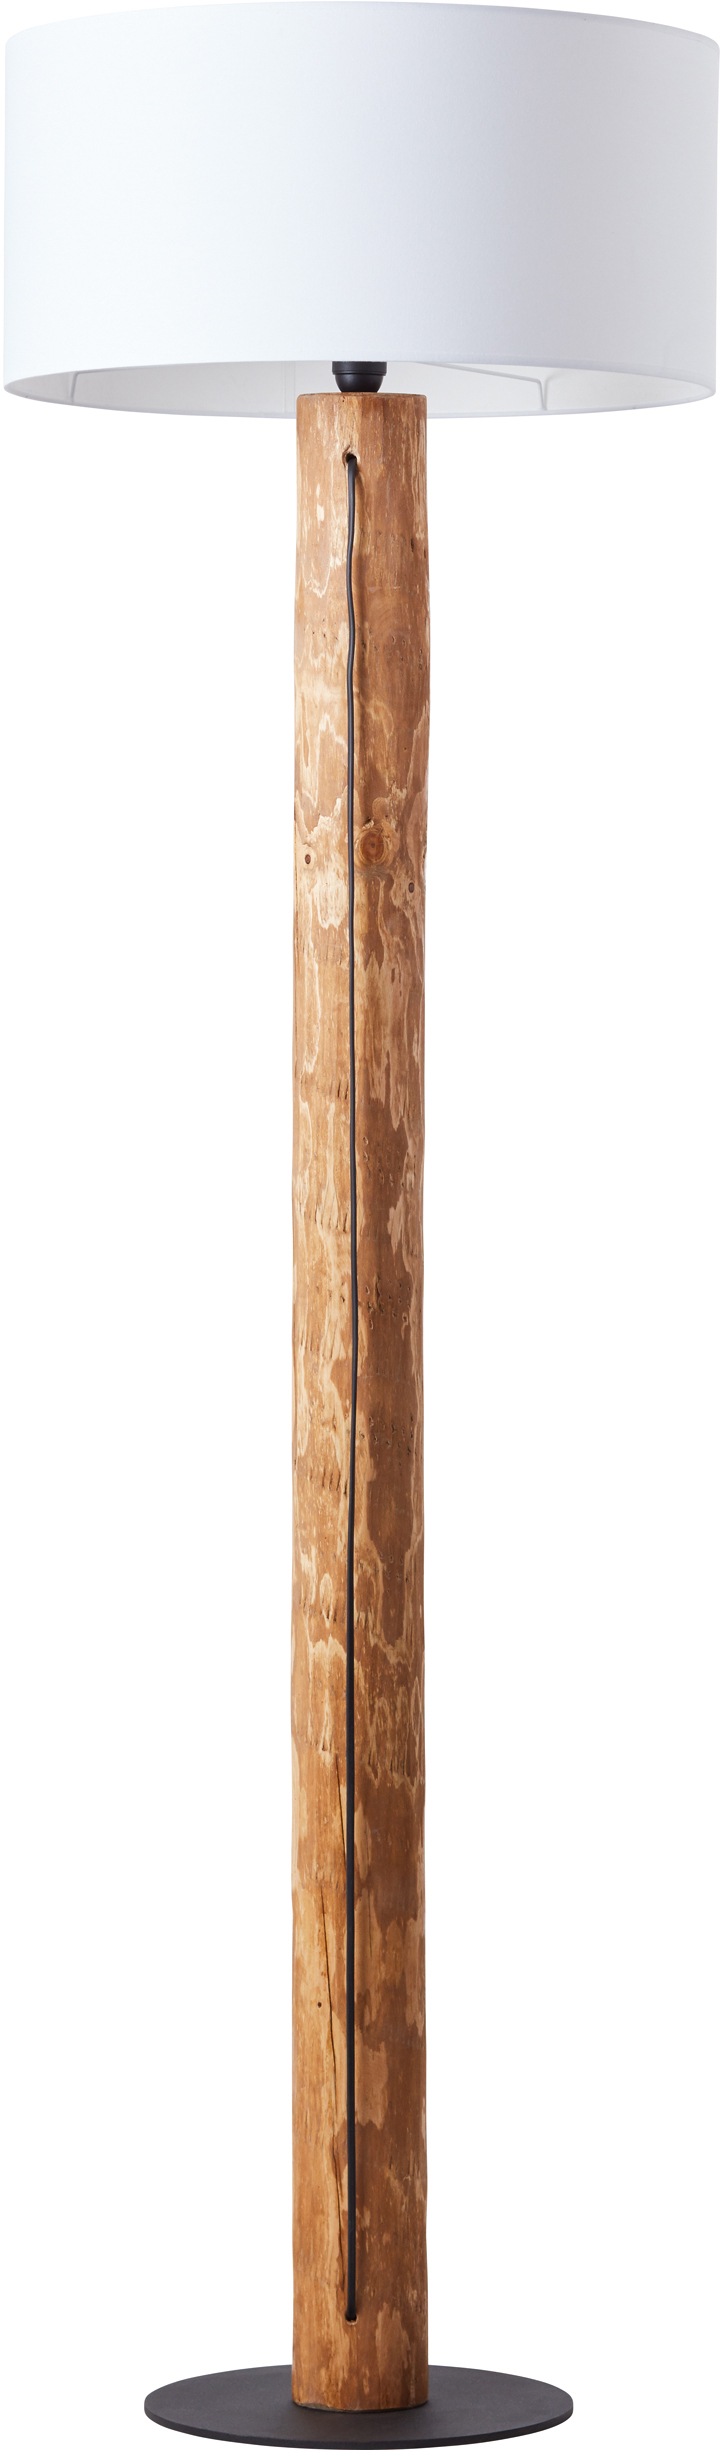 Brilliant Stehlampe »Jimena«, 1 flammig-flammig, Stoffschirm, H 164 cm, Ø 50 cm, E27, Holz/Textil, kiefer gebeizt/weiss